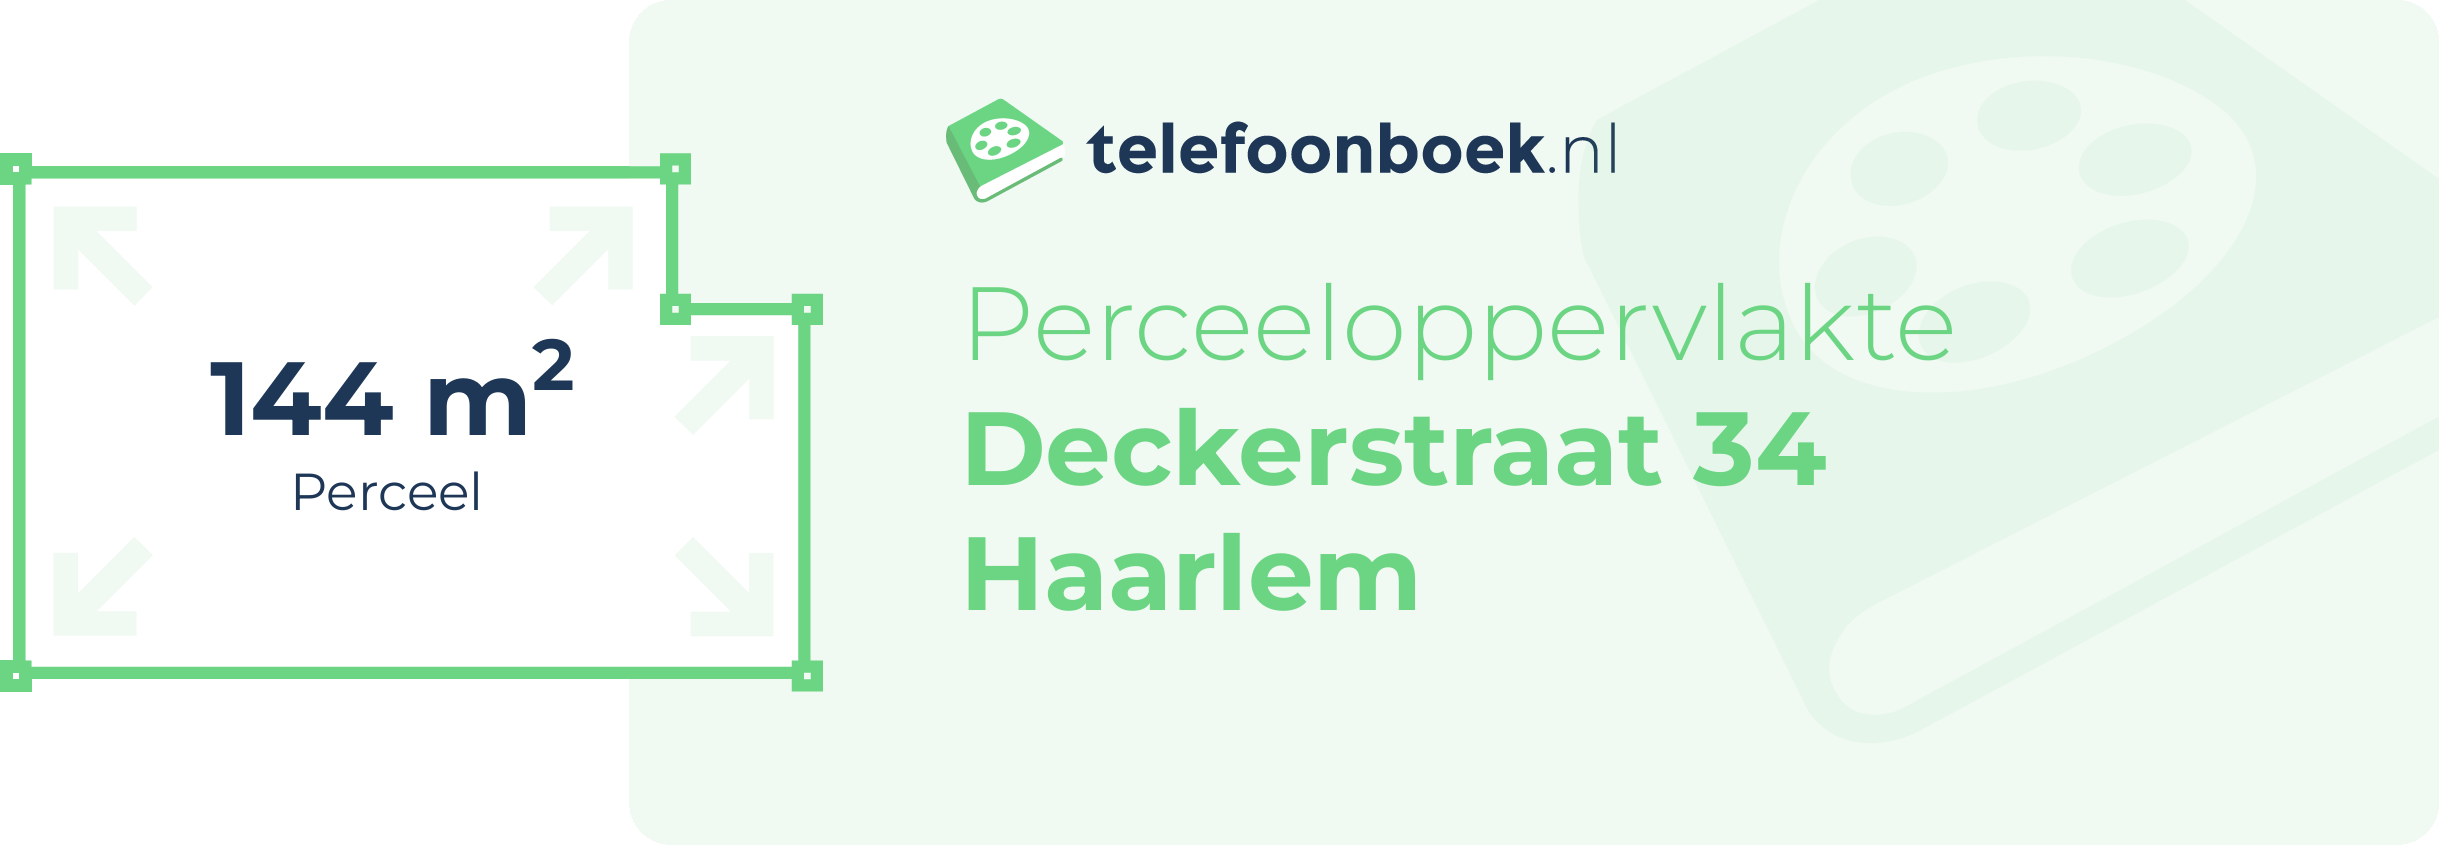 Perceeloppervlakte Deckerstraat 34 Haarlem